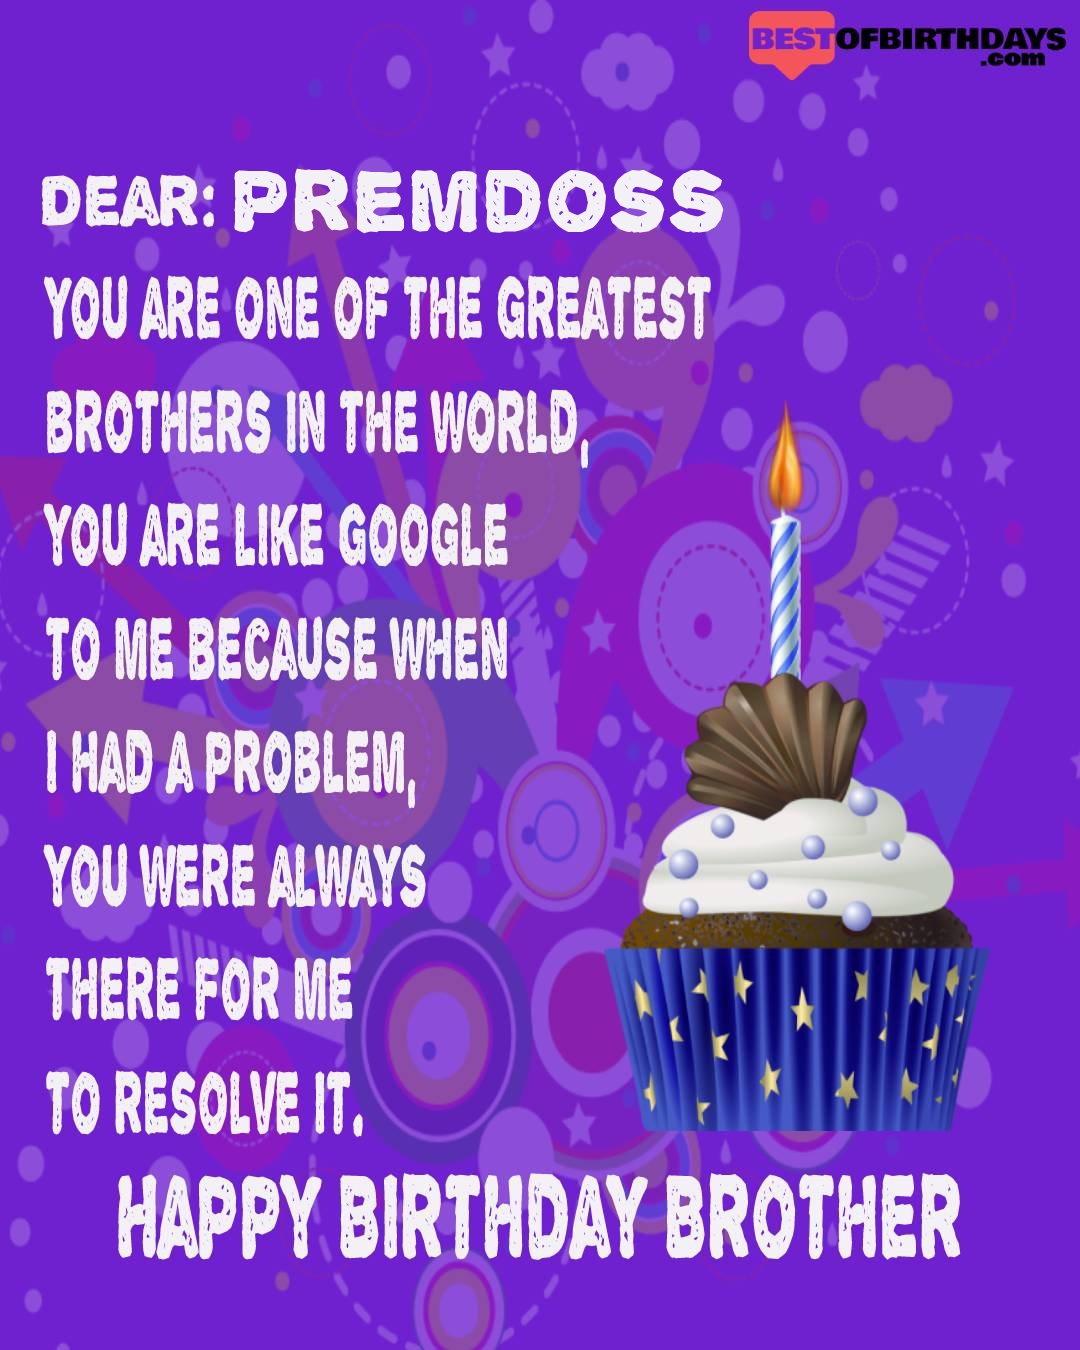 Happy birthday premdoss bhai brother bro